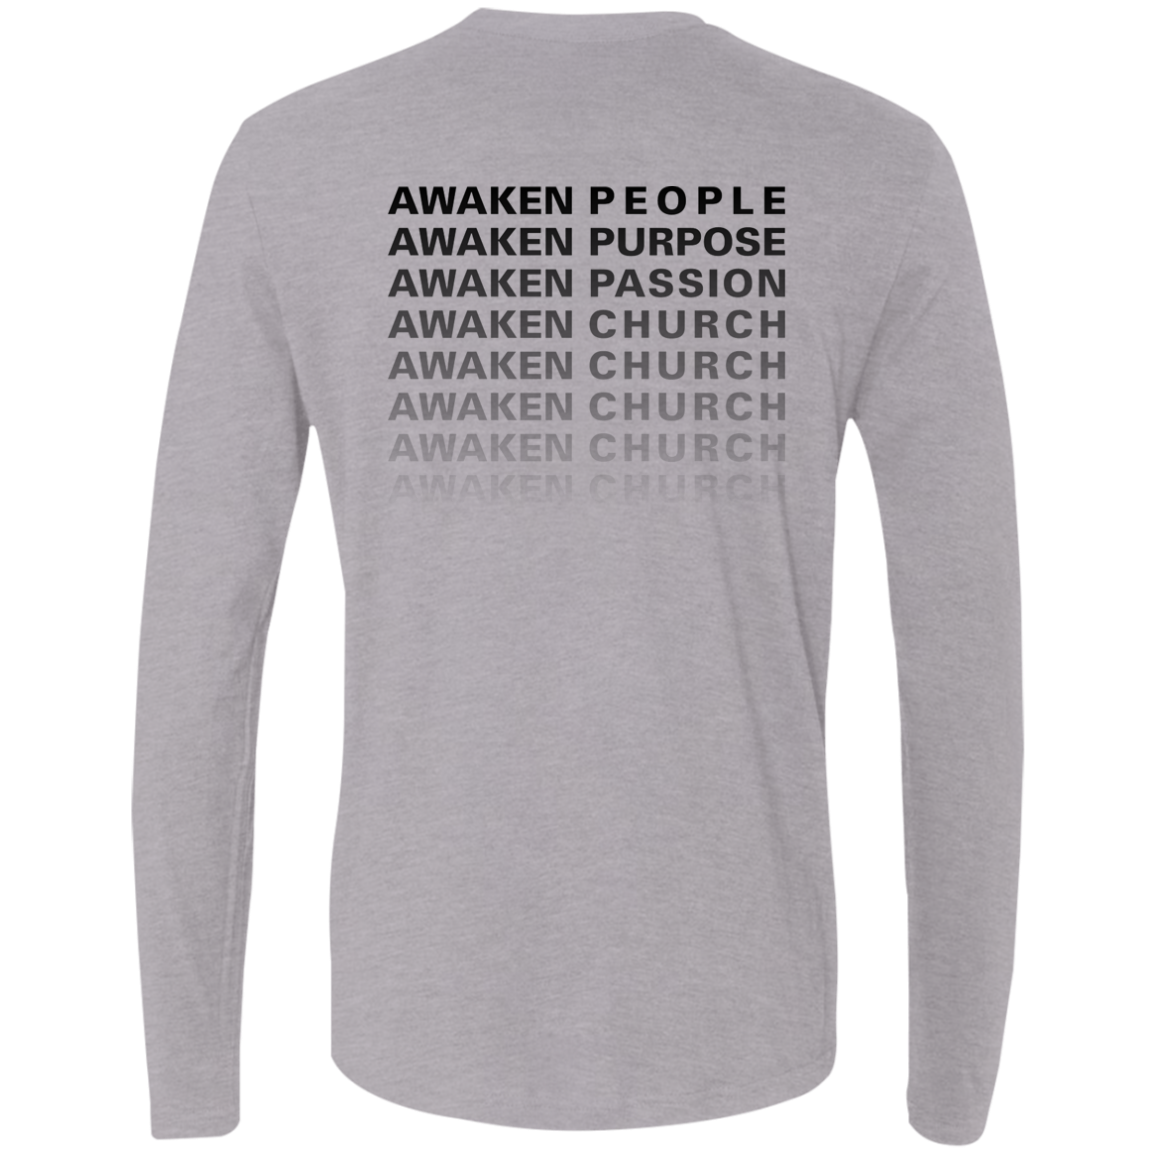 Awaken Church Long Sleeves - Back Print